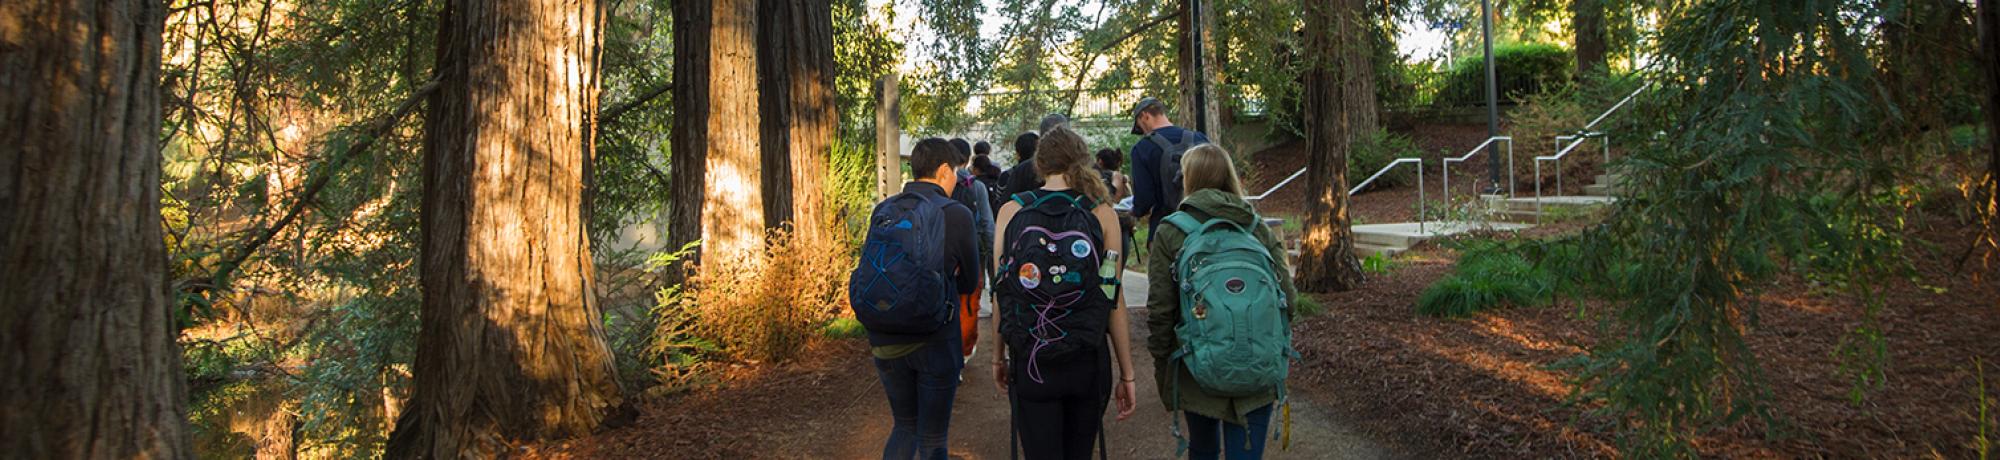 Students walking in the arboretum.